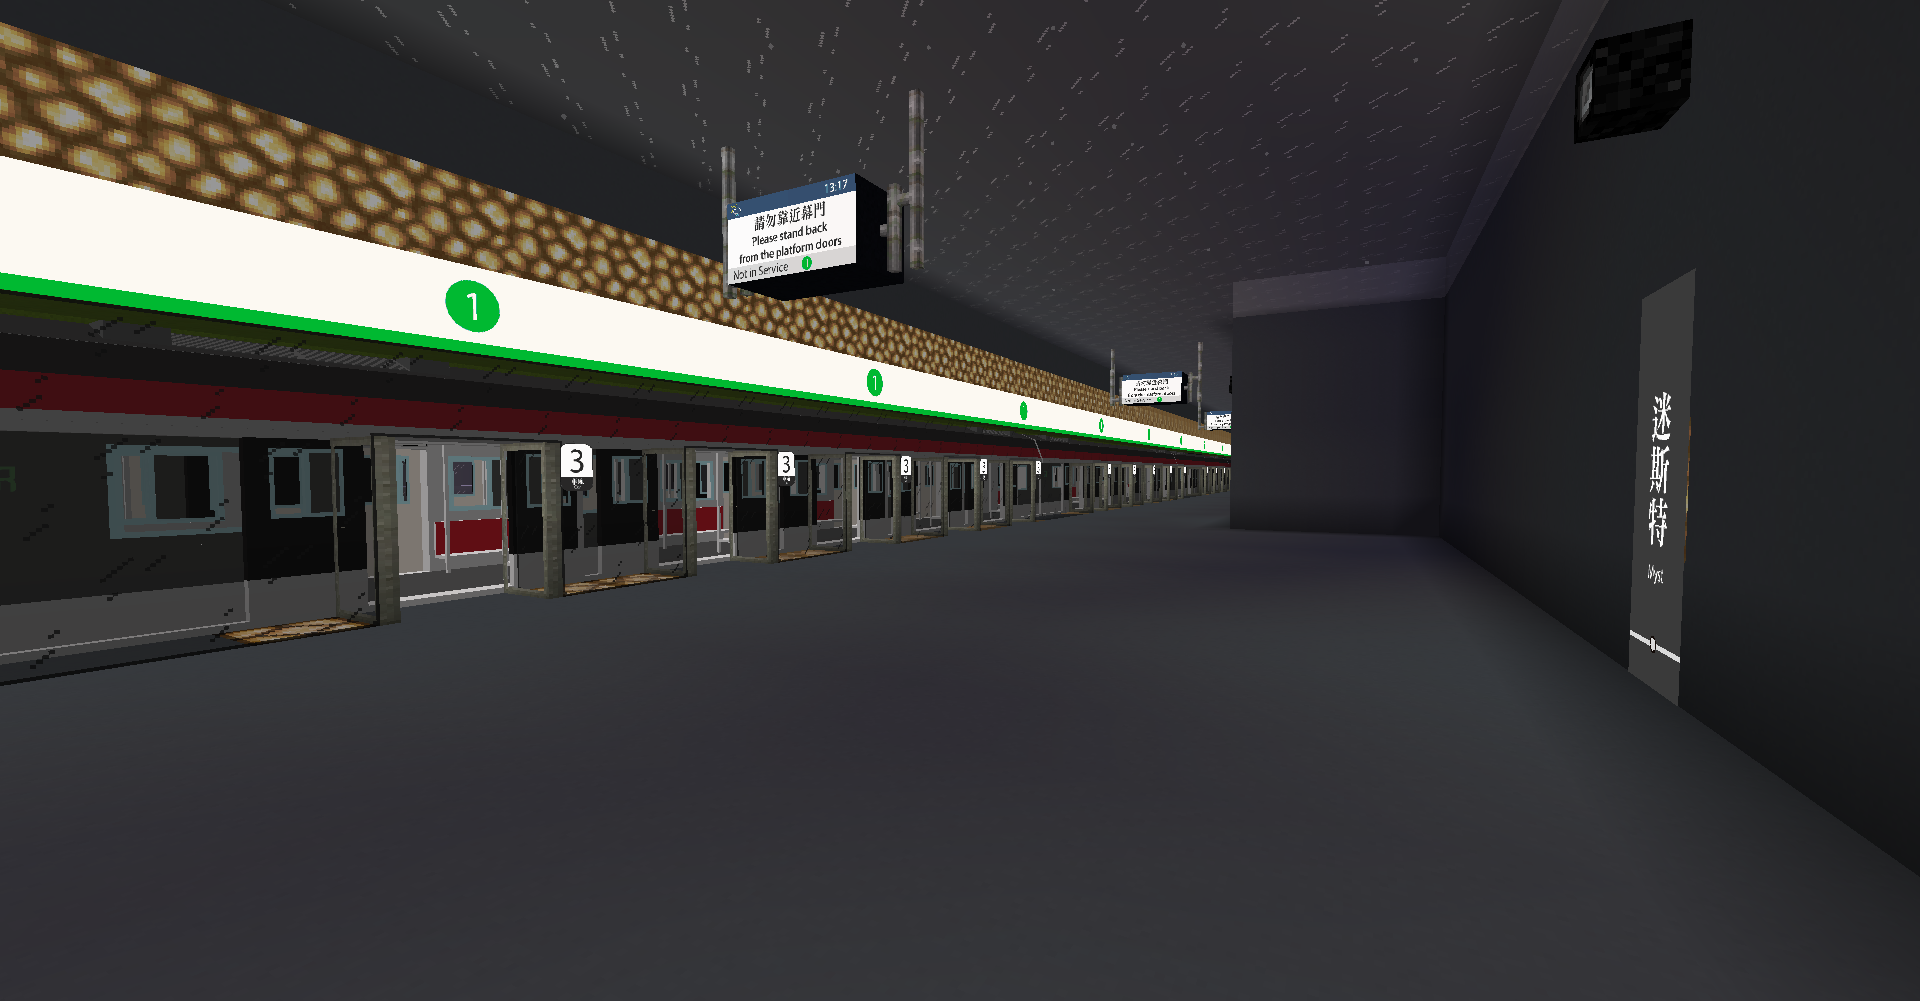 SCR Myst Station Platform 1